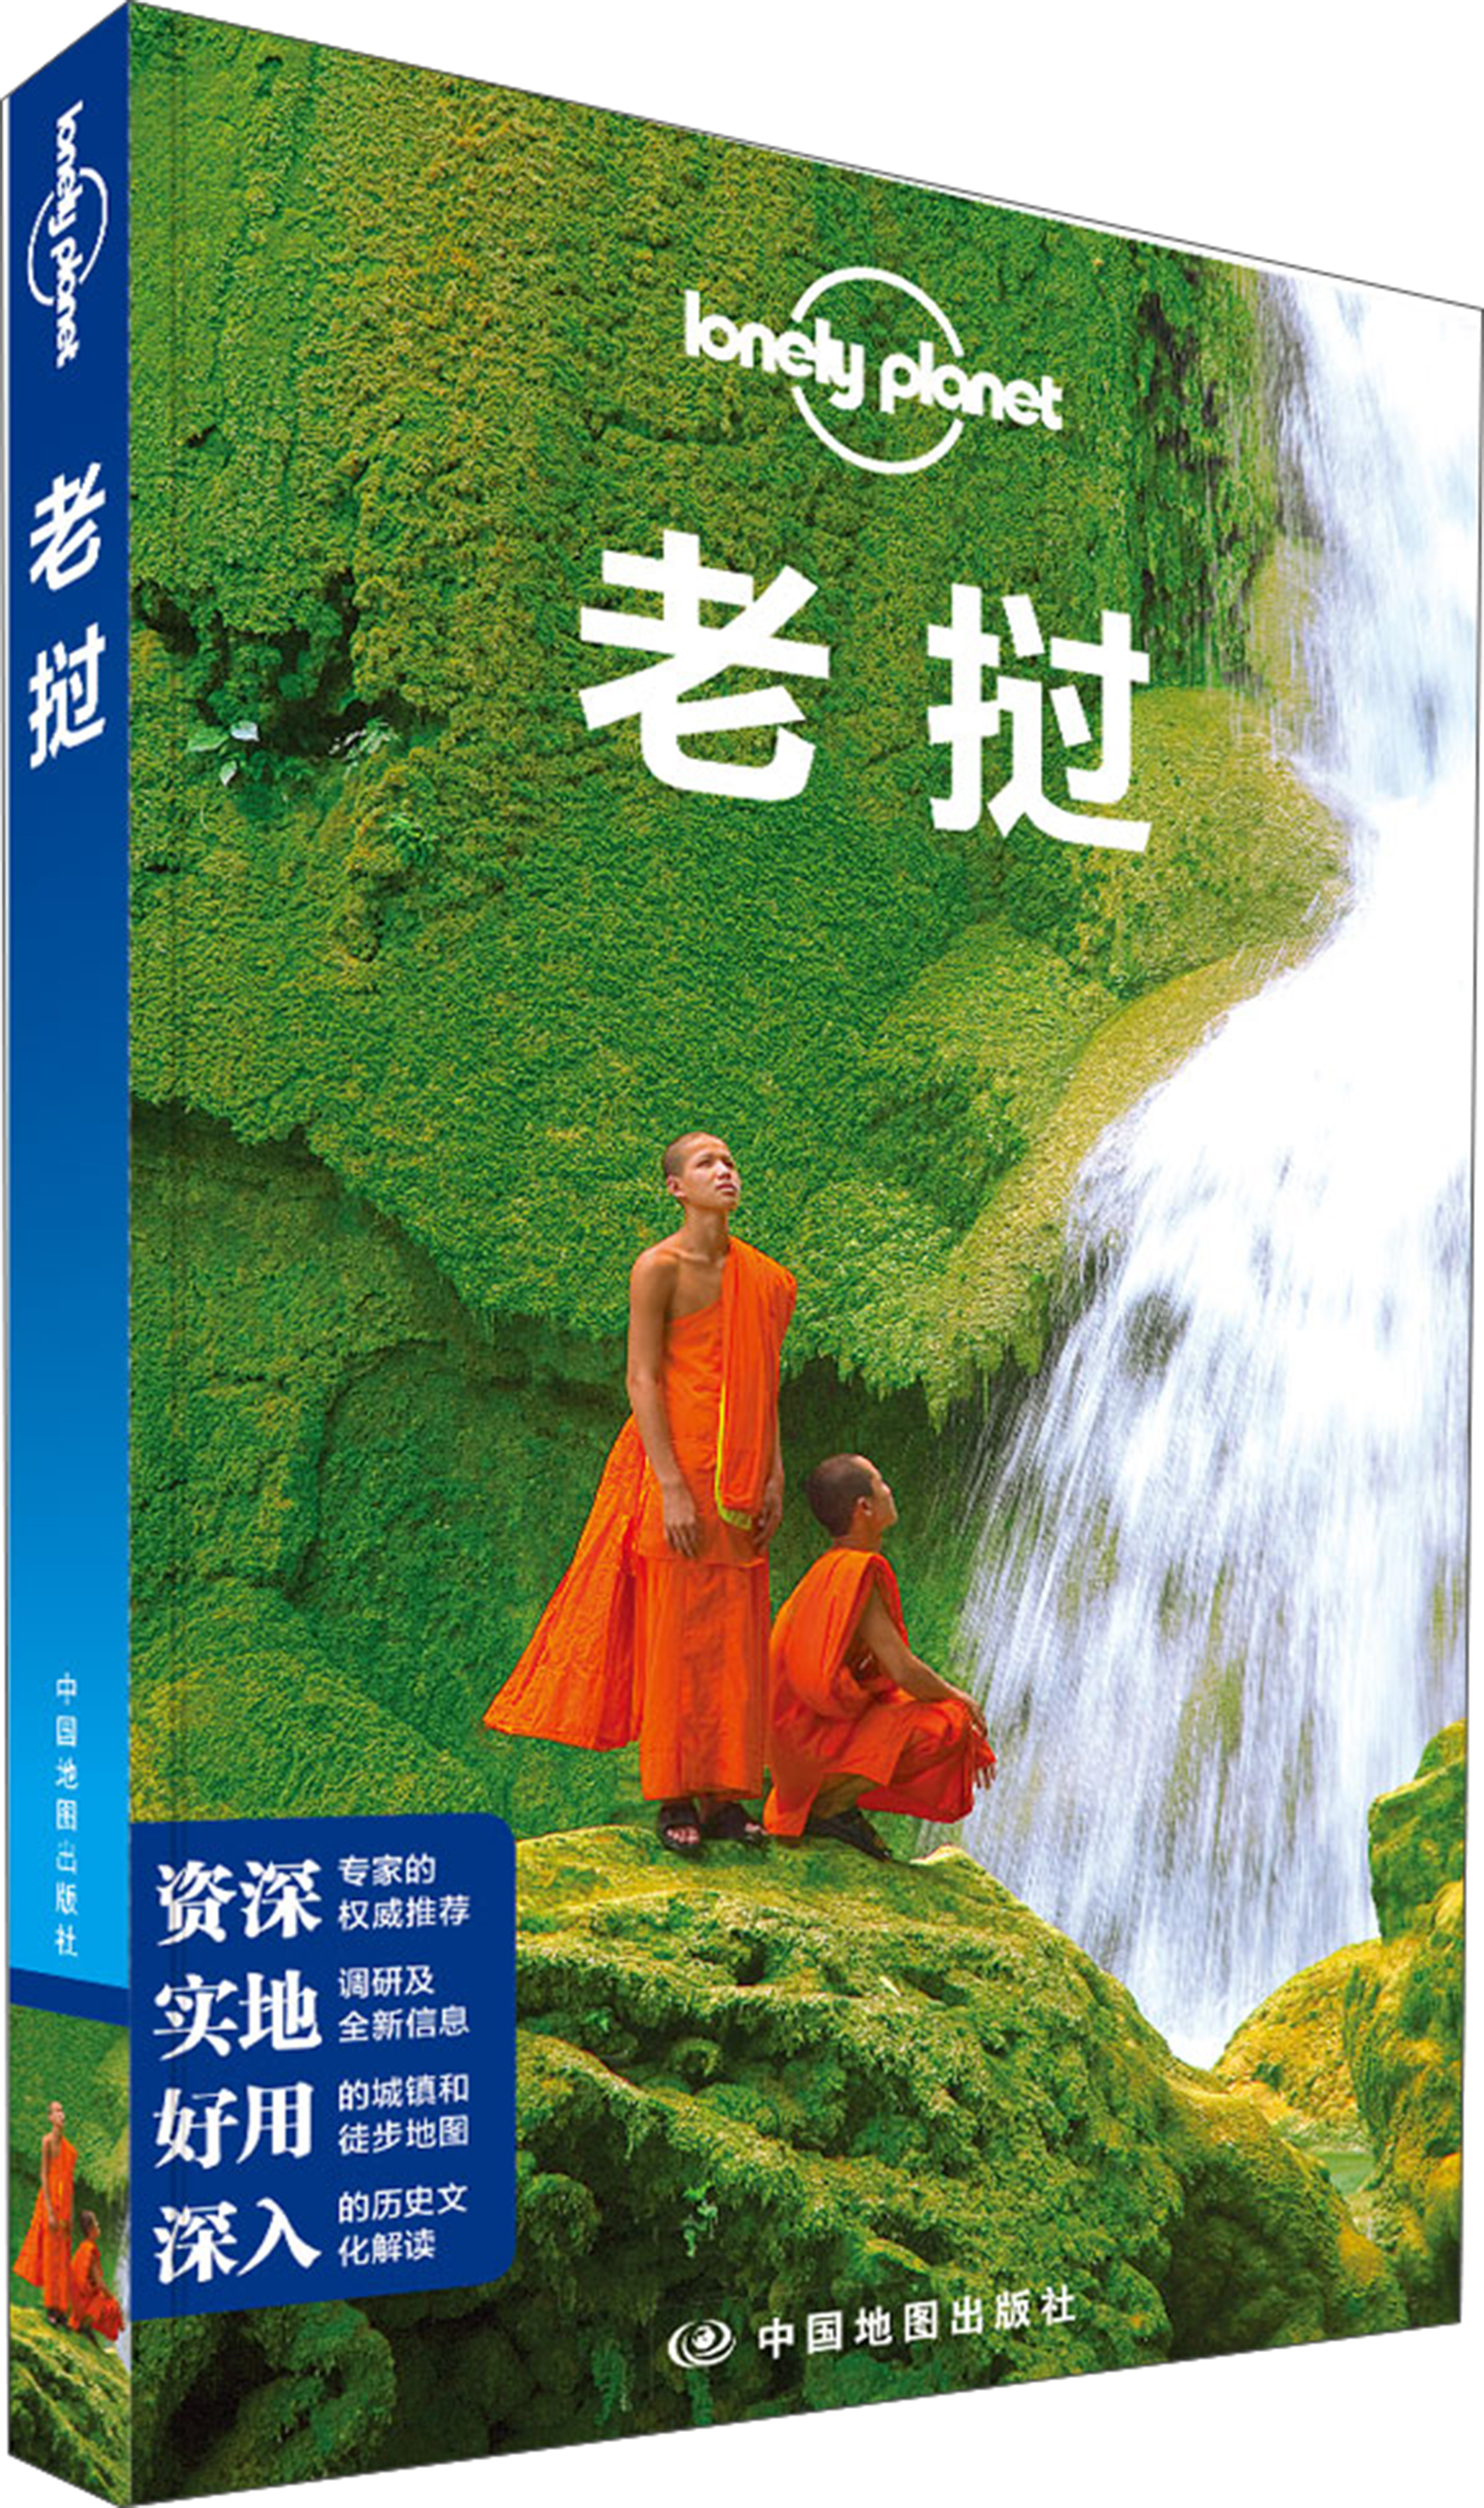 孤独星球Lonely Planet旅行指南系列：老挝 kindle格式下载